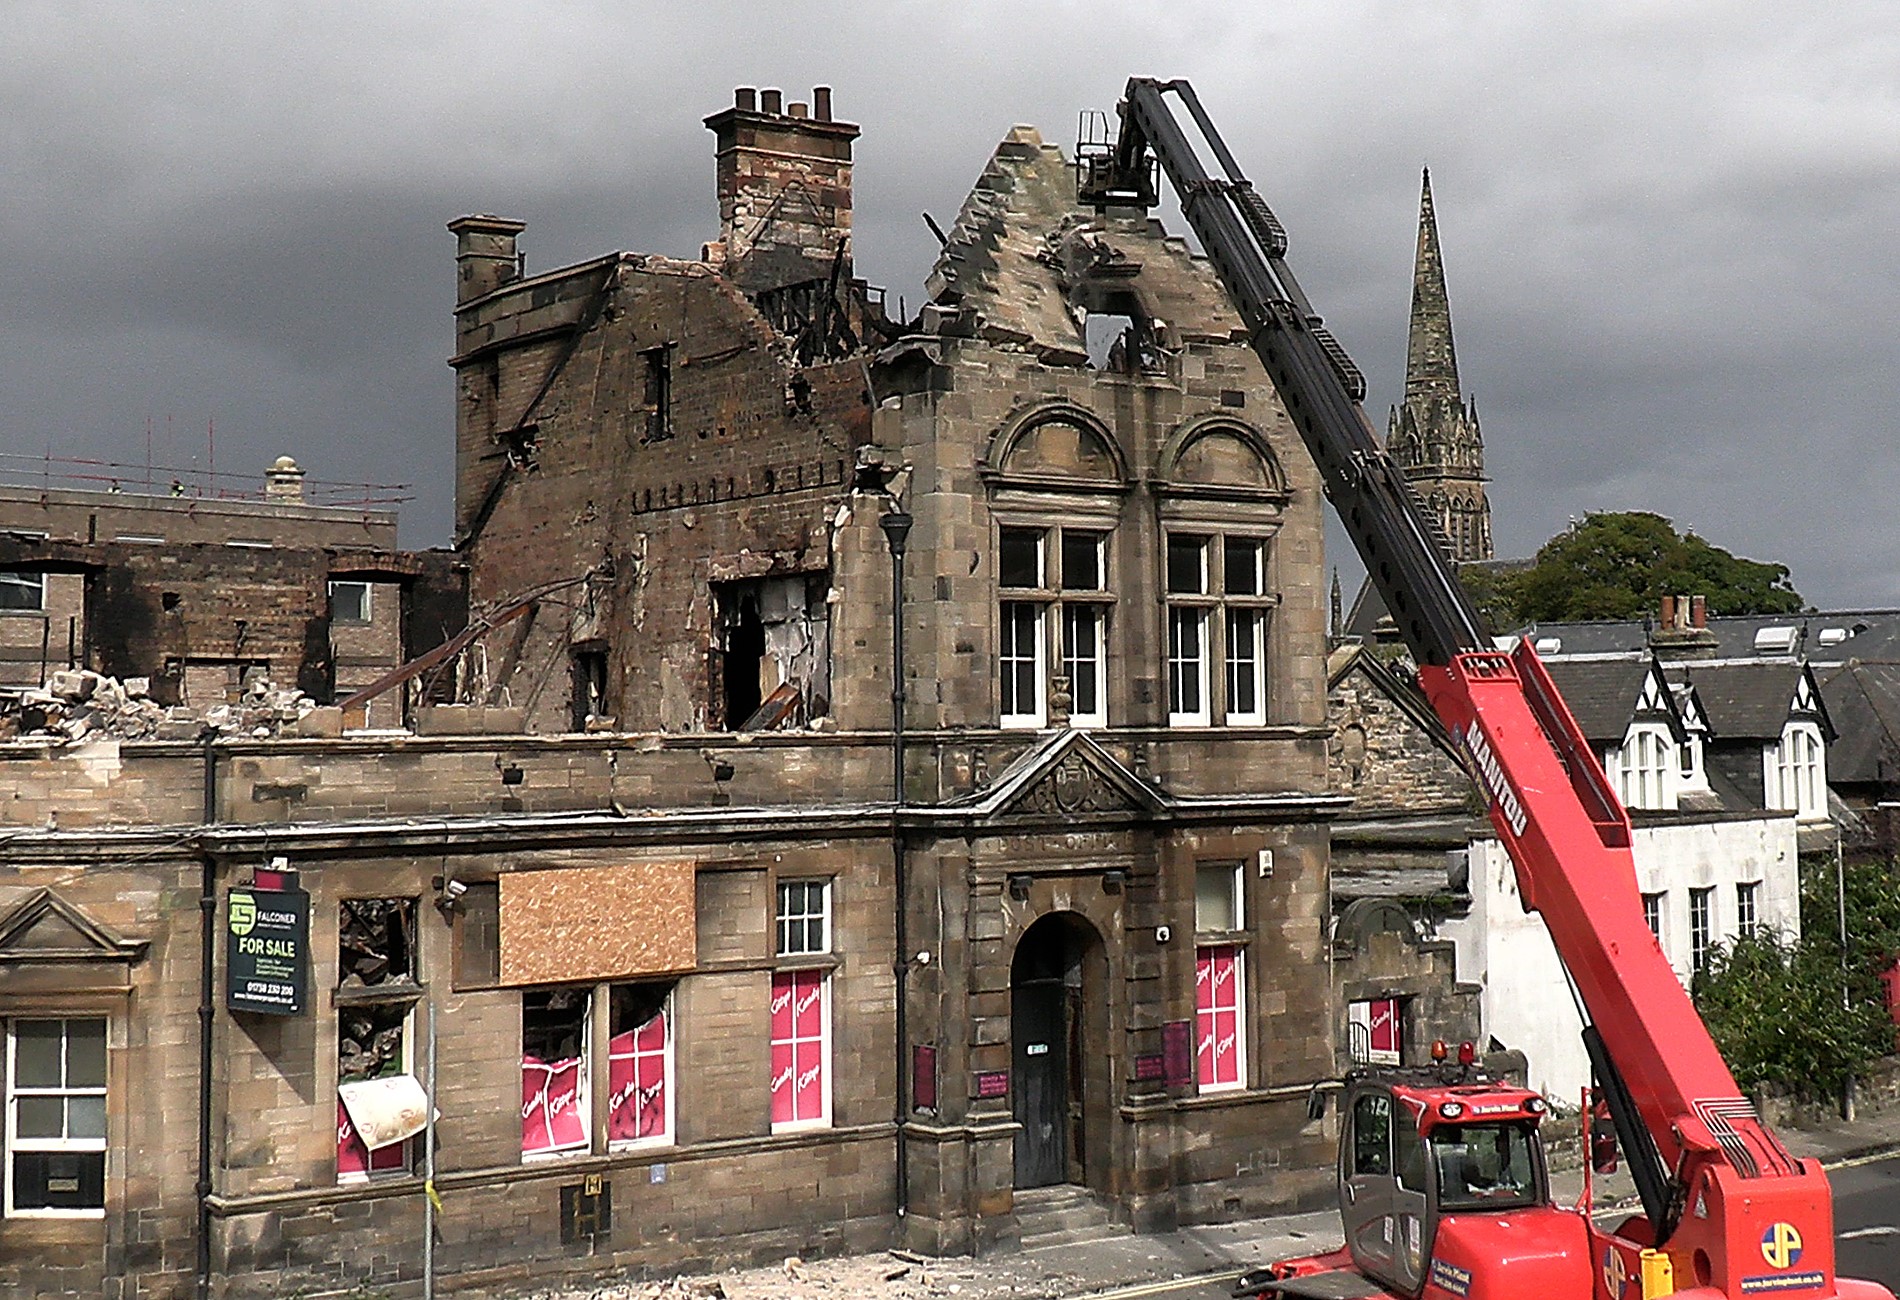 Demolition begins of the former Kitty's nightclub in Kirkcaldy